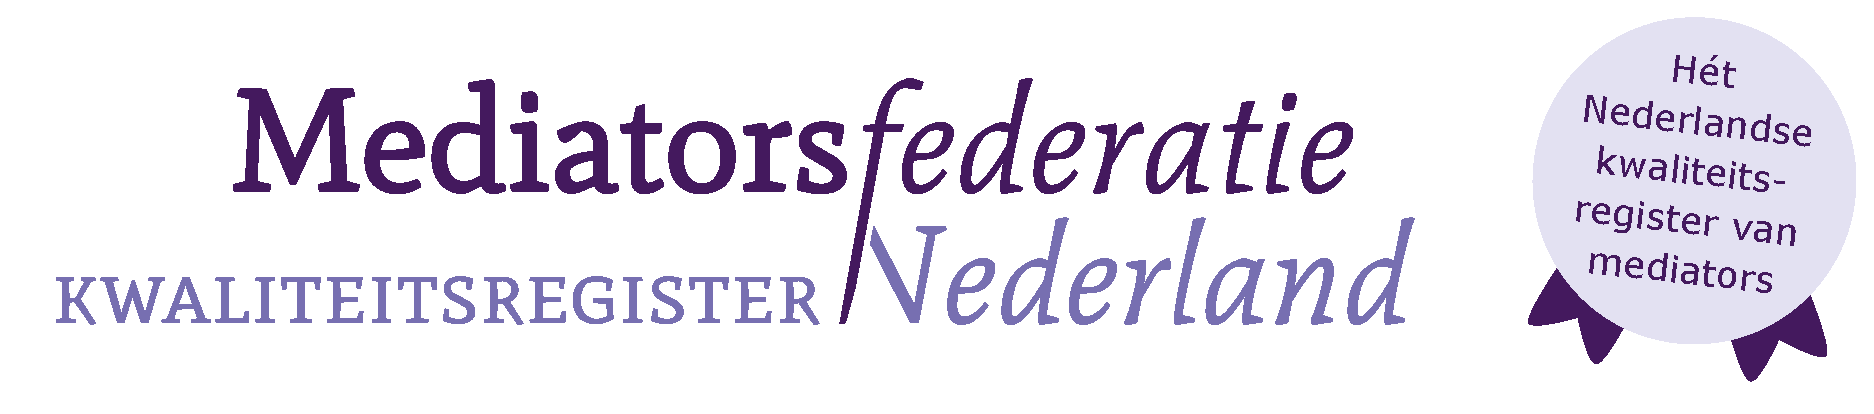 mediation federatie logo